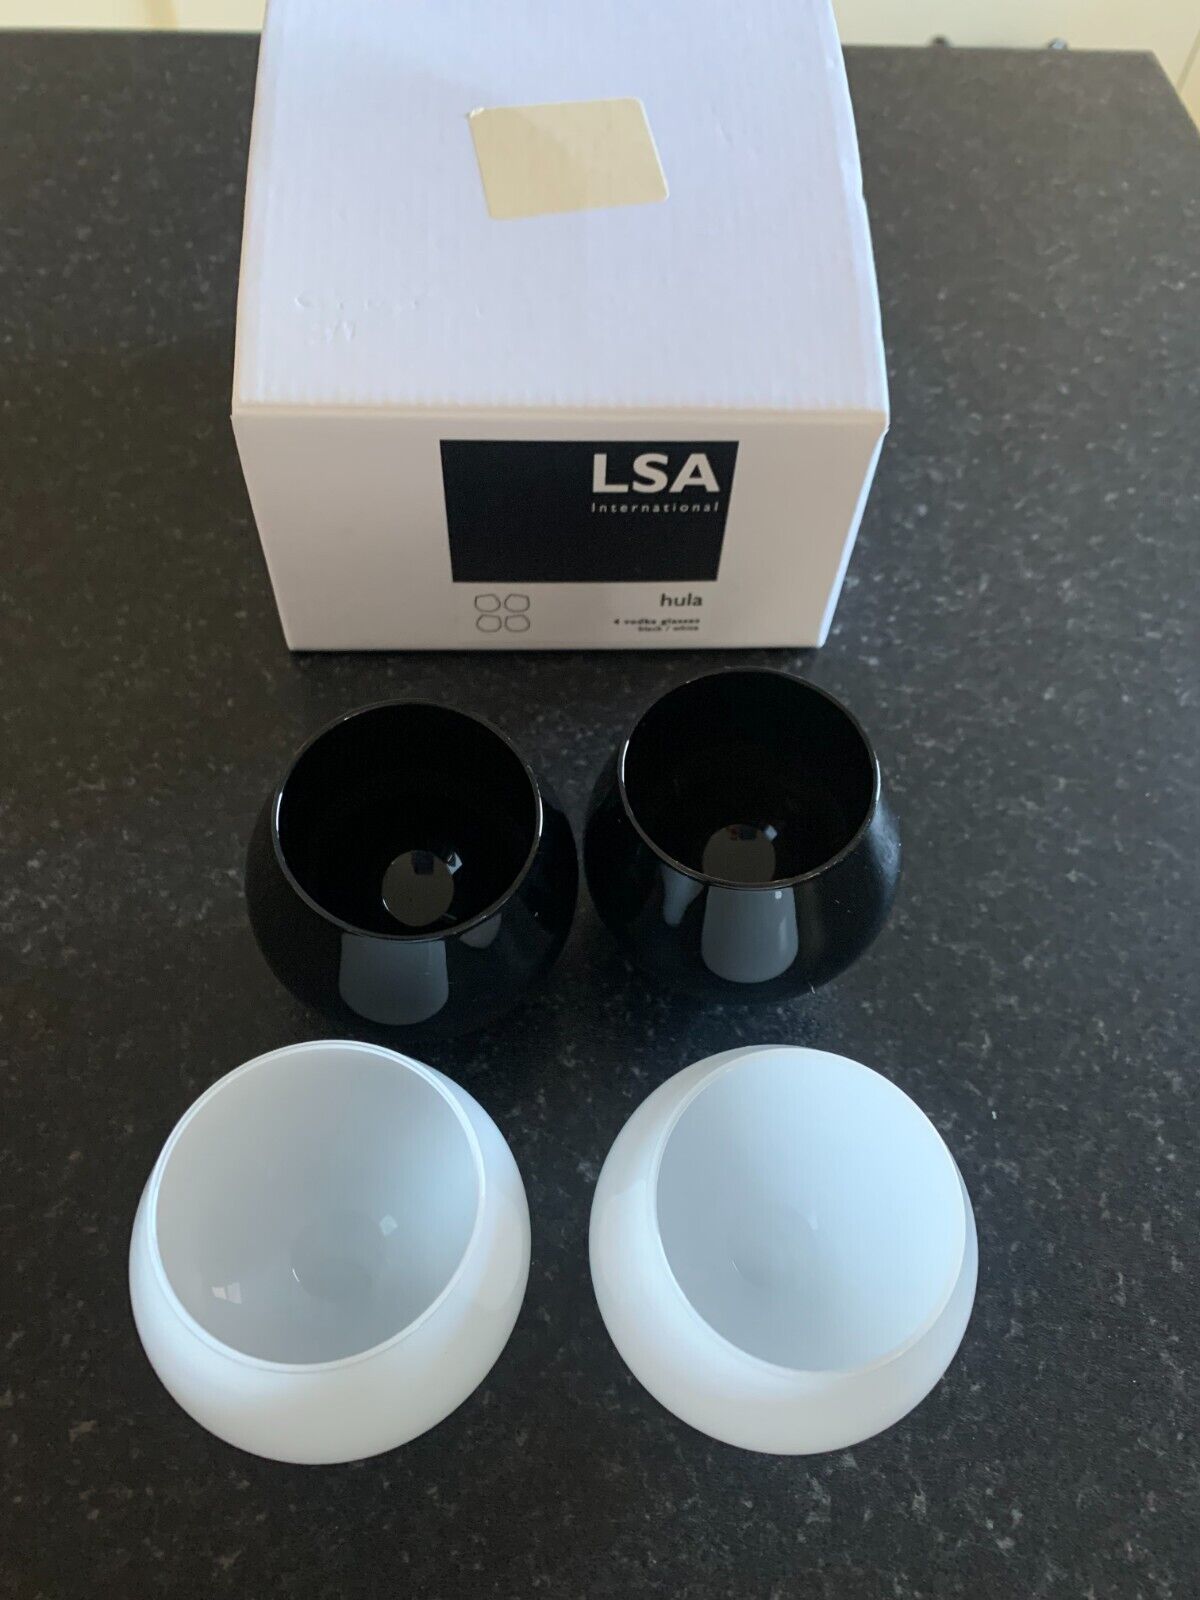 LSA INTERNATIONAL BOXED SET OF 4 HULA VODKA SHOT GLASSES BLACK&WHITE ROUND BASE